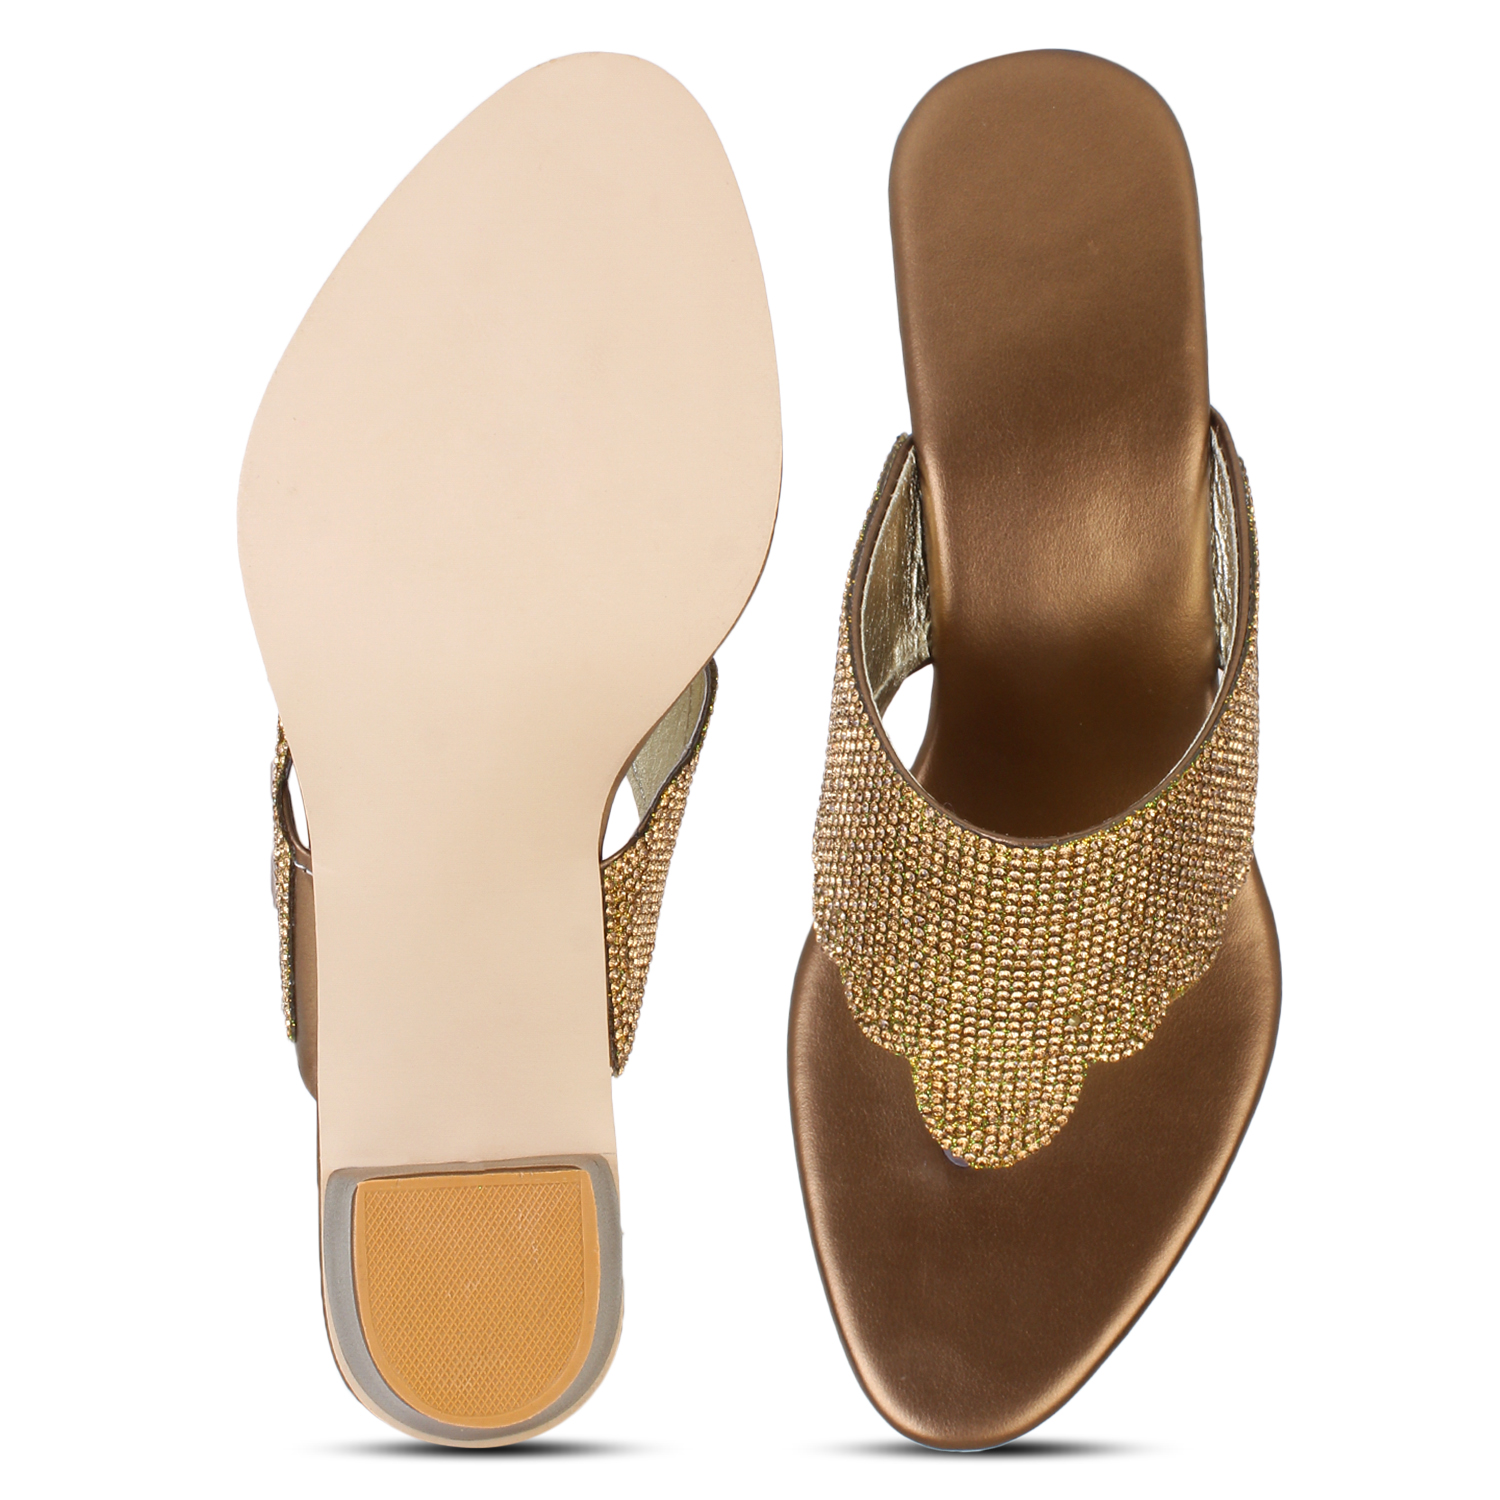 Soda new ladies Slip On GOLD Sandals WOMEN Size 7 | eBay